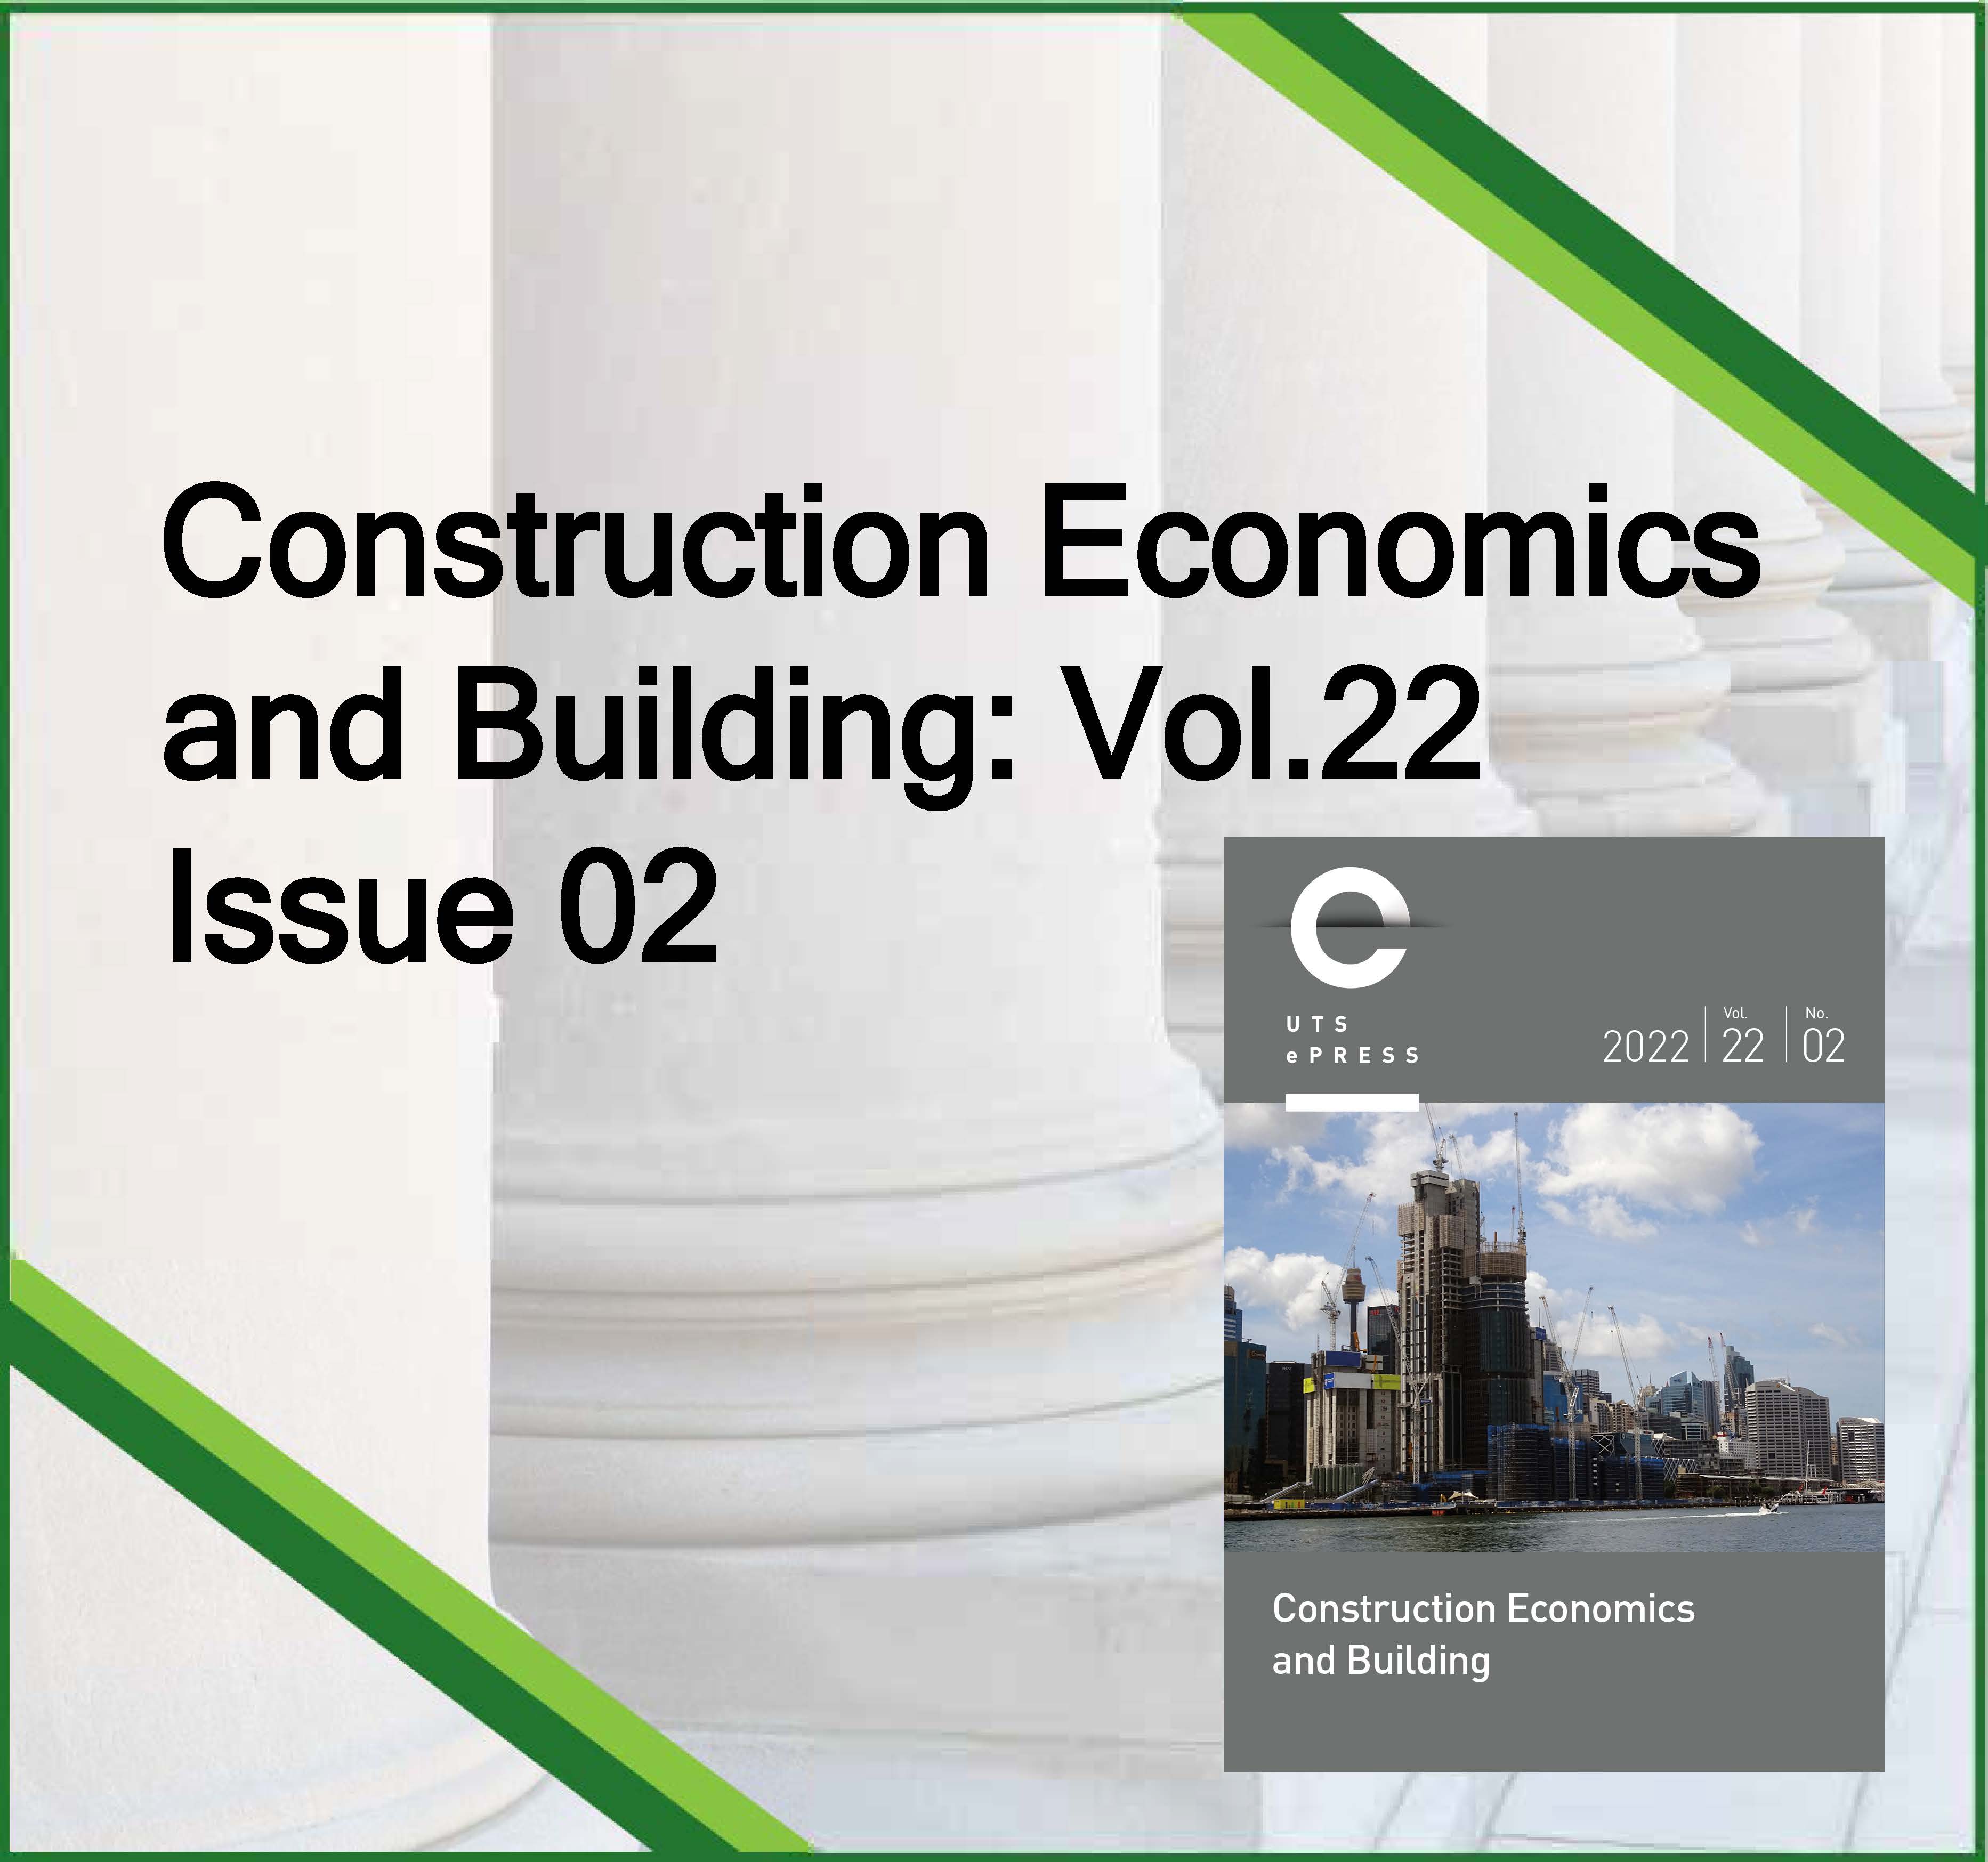 Construction Economics and Building: Vol.22 Issue 02